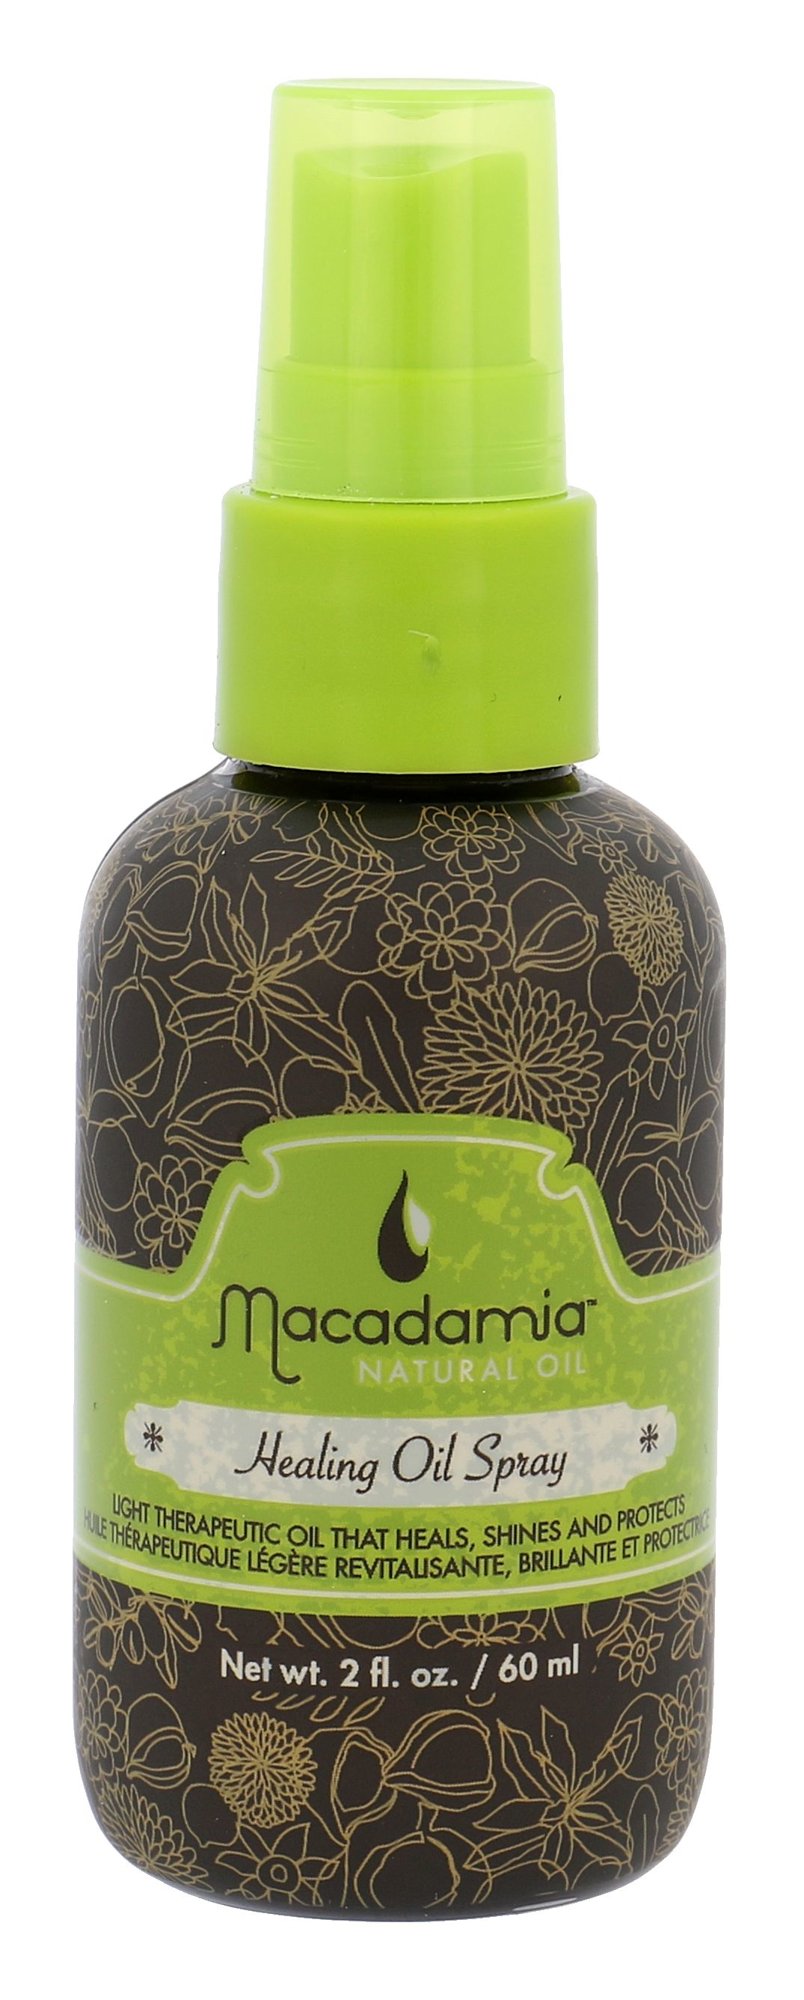 Macadamia Professional Healing Oil Spray